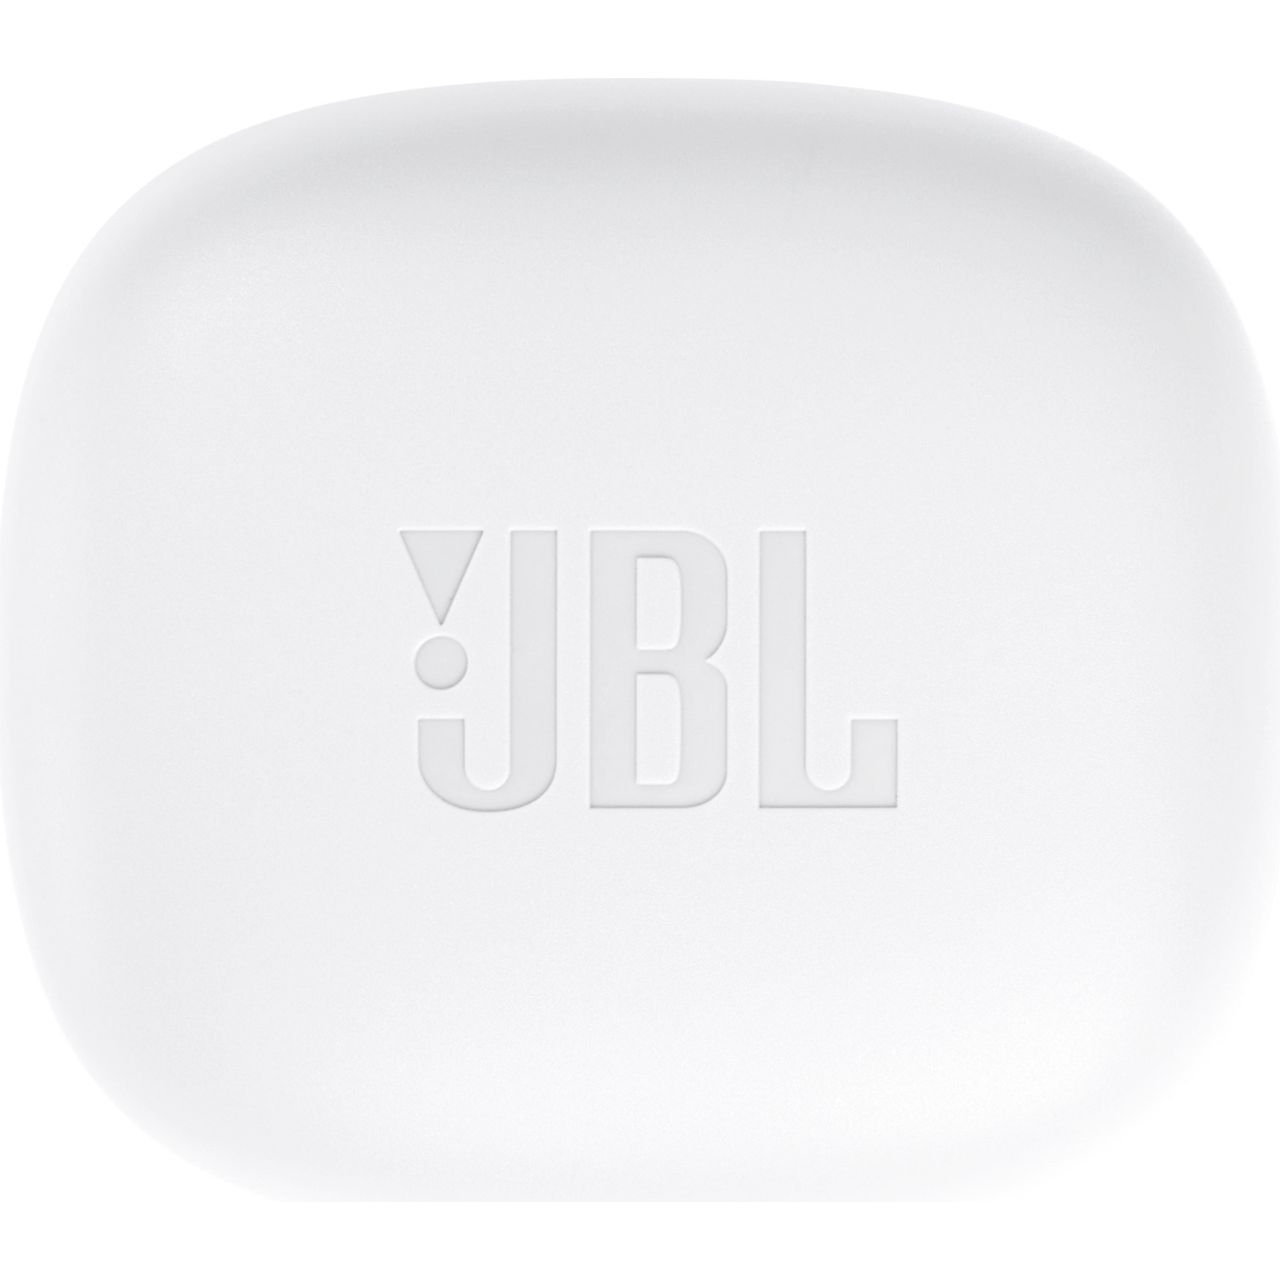 JBL Wave Flex specifications